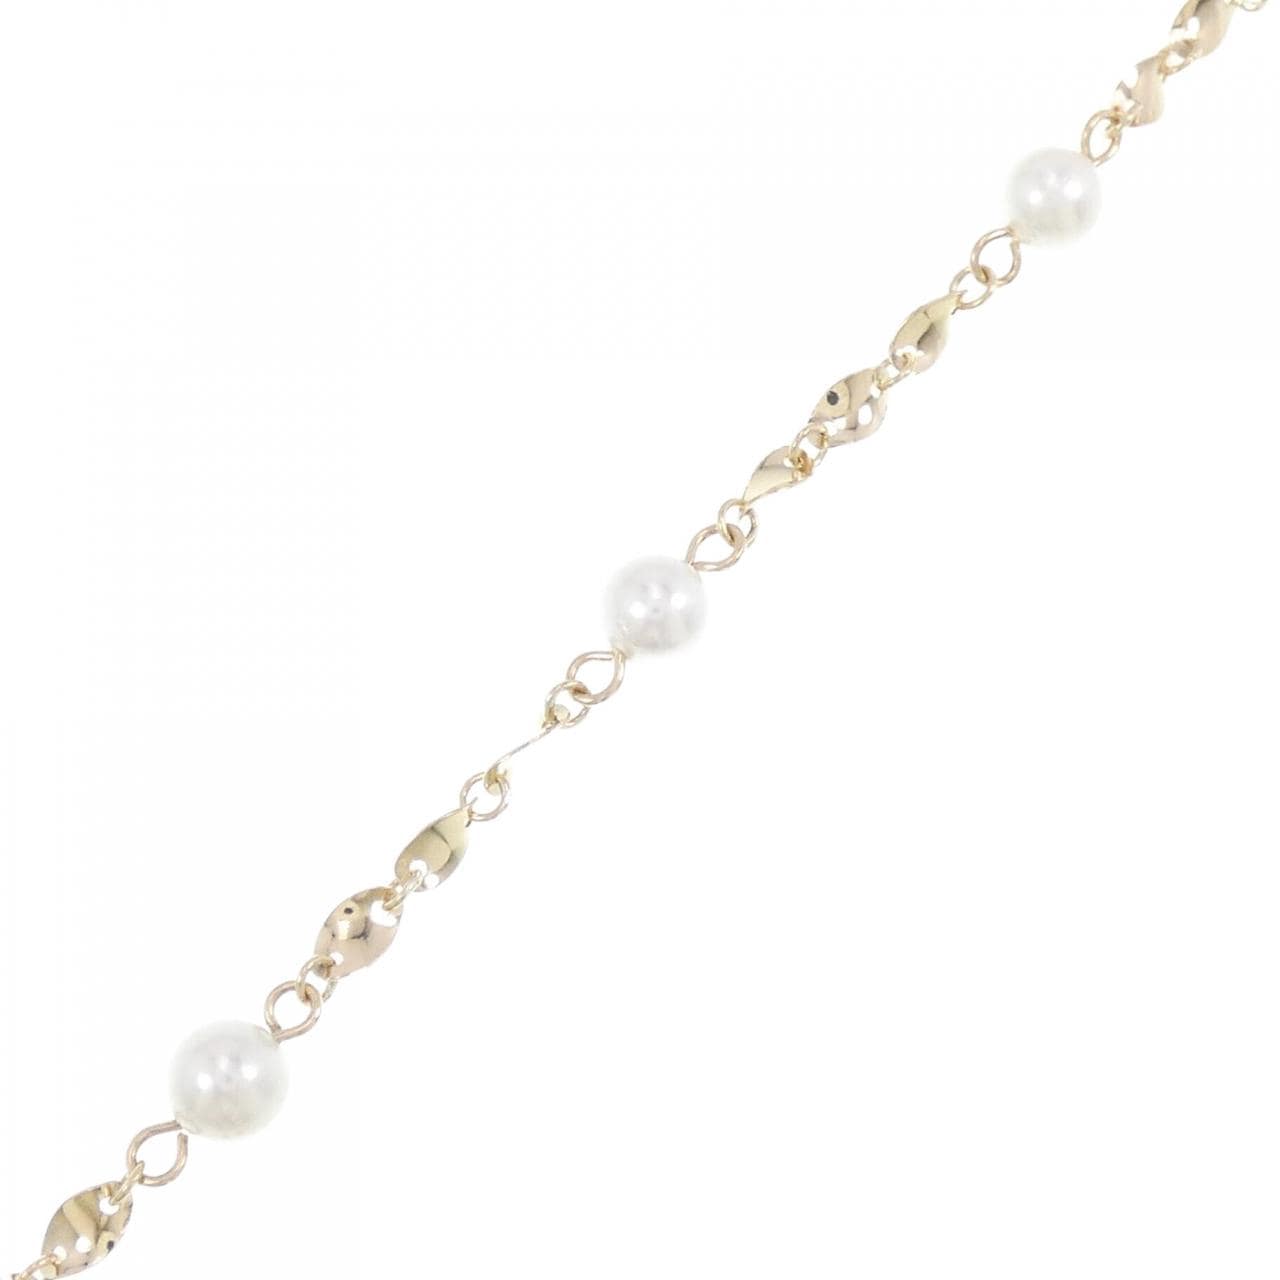 K18YG Akoya pearl bracelet